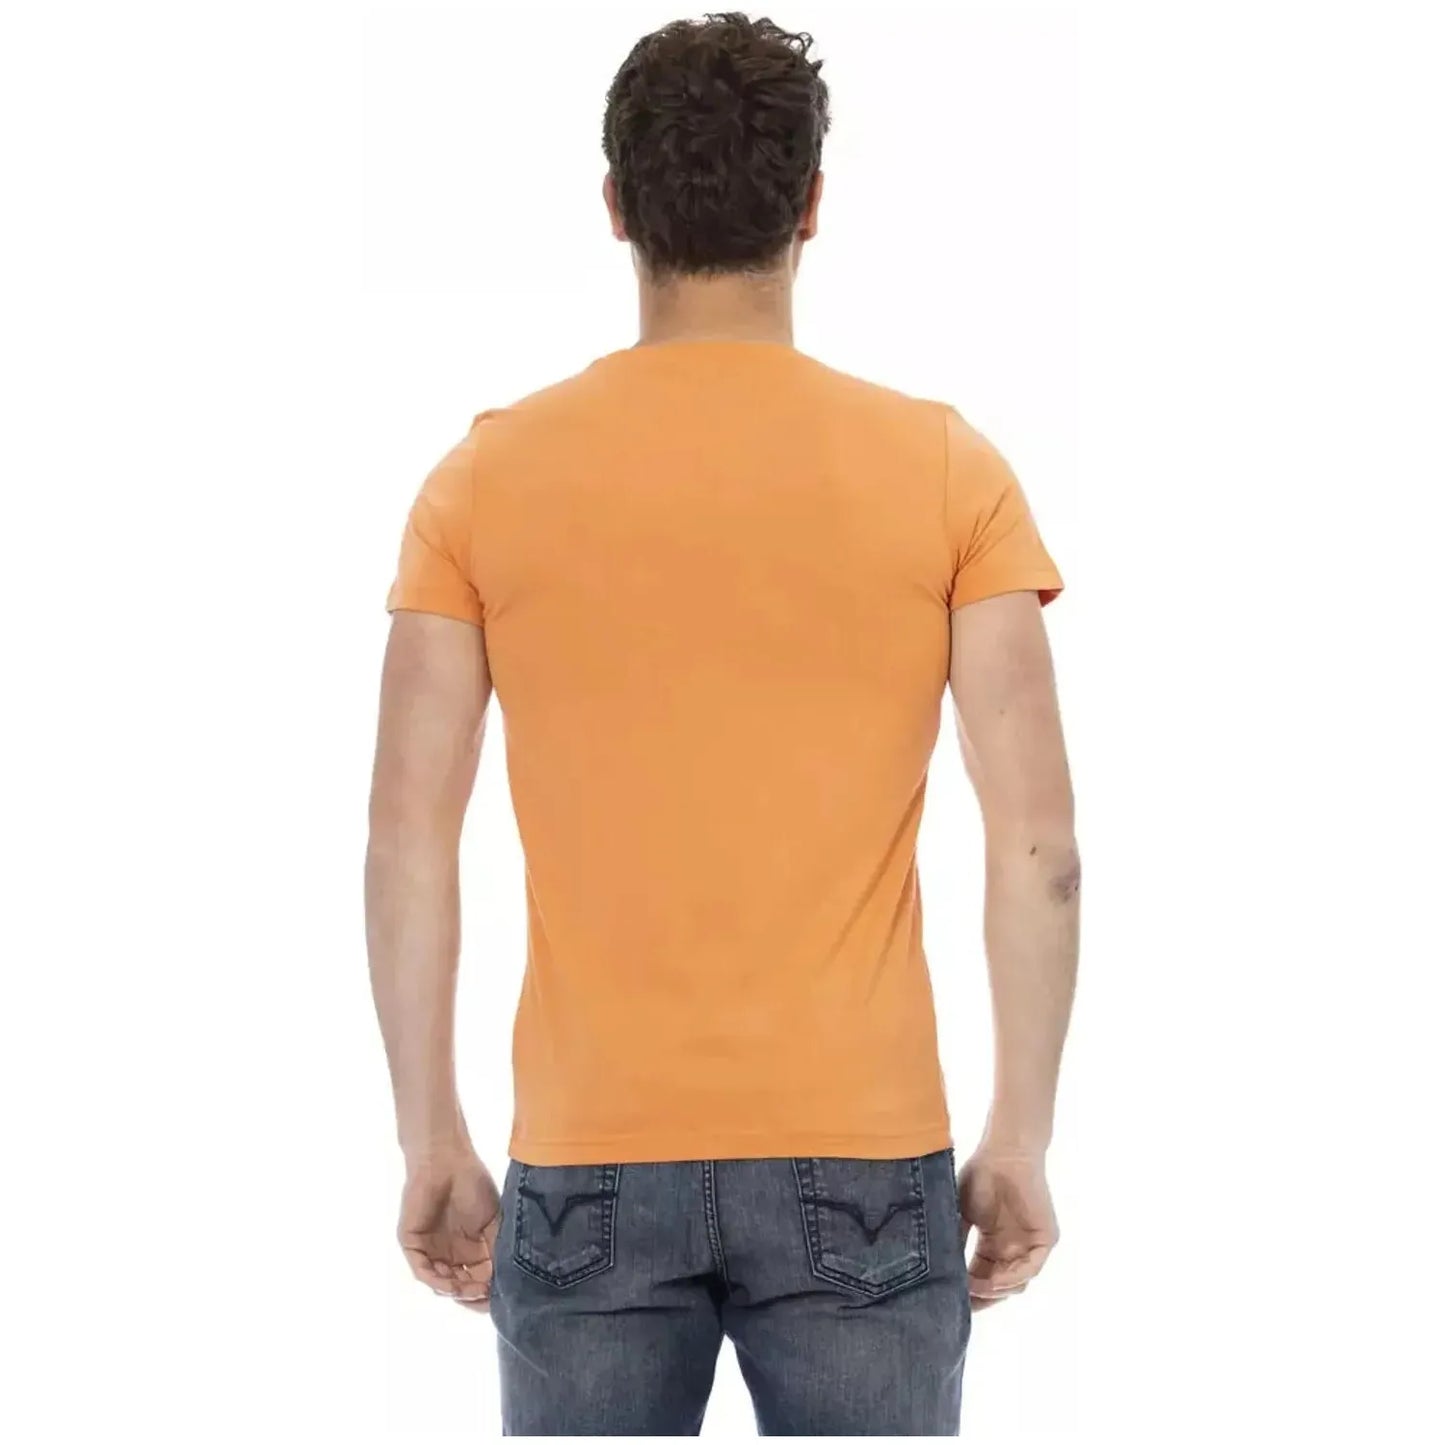 Trussardi Action Orange Cotton Blend Tee with Chic Front Print orange-cotton-t-shirt-18